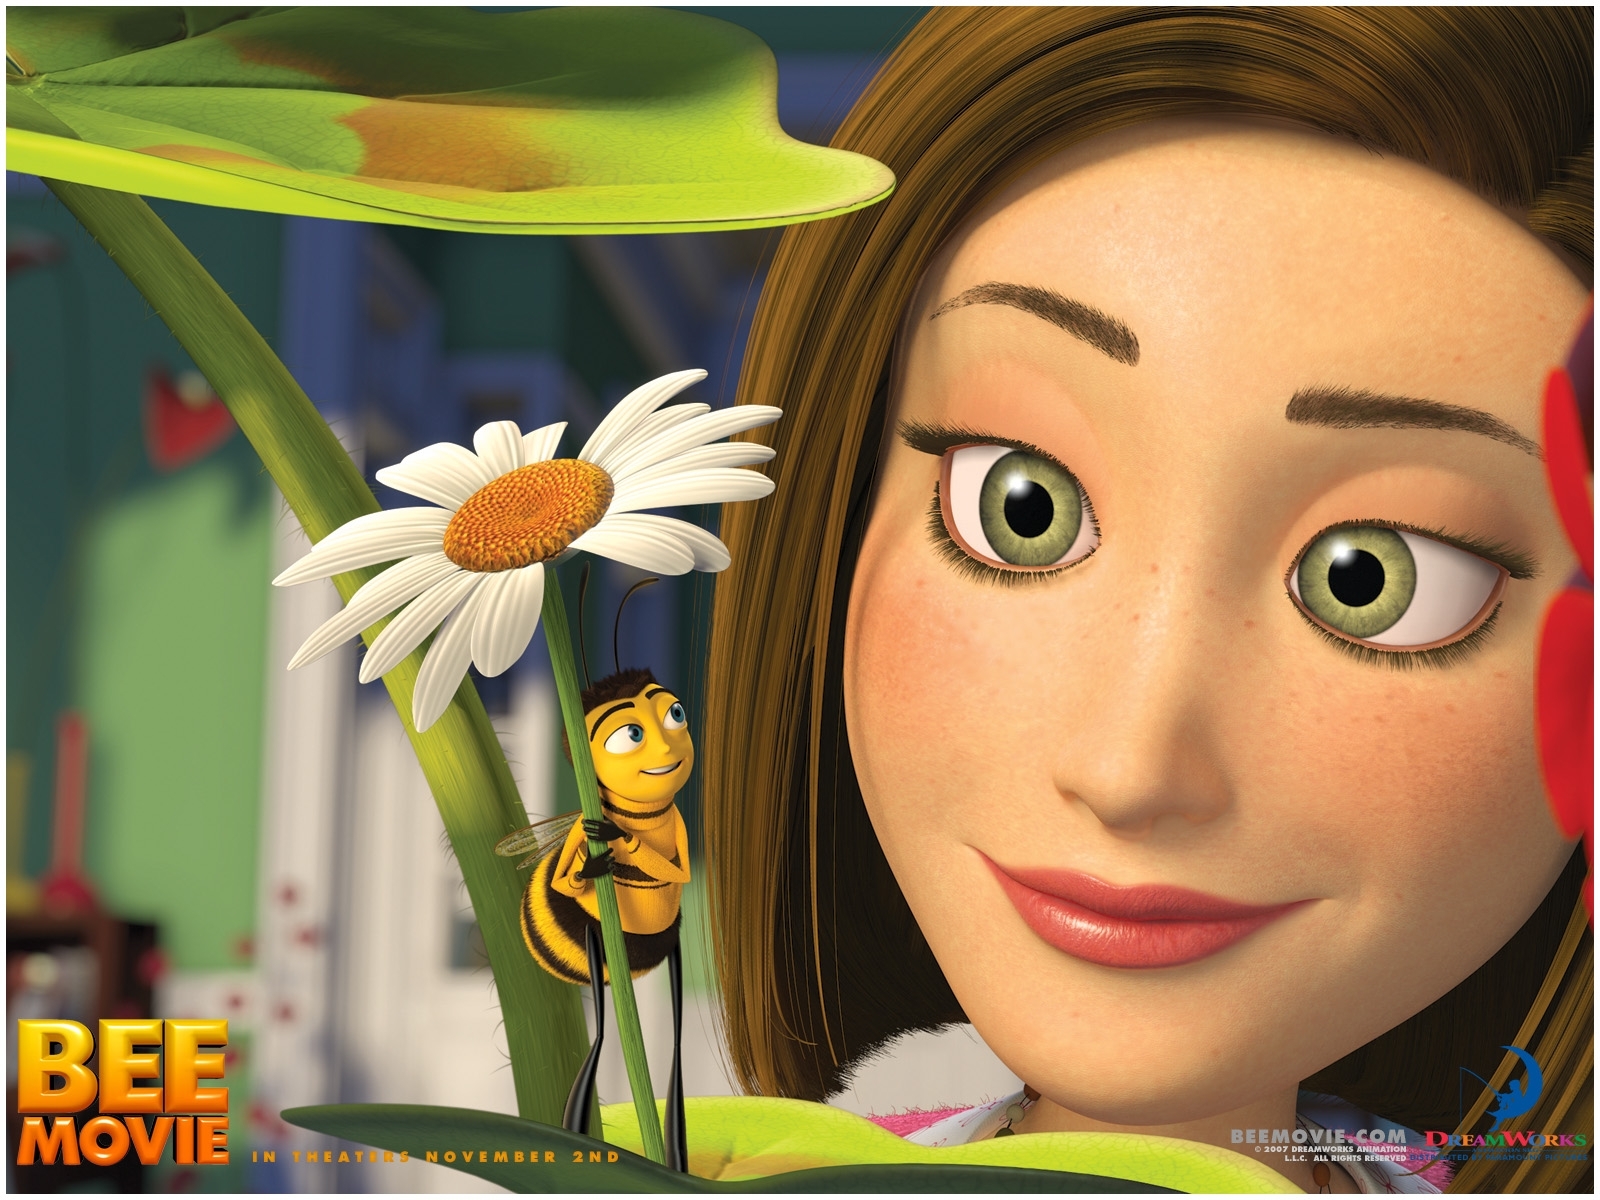 Популярные заставки и фоны Би Муви (Bee Movie) на компьютер